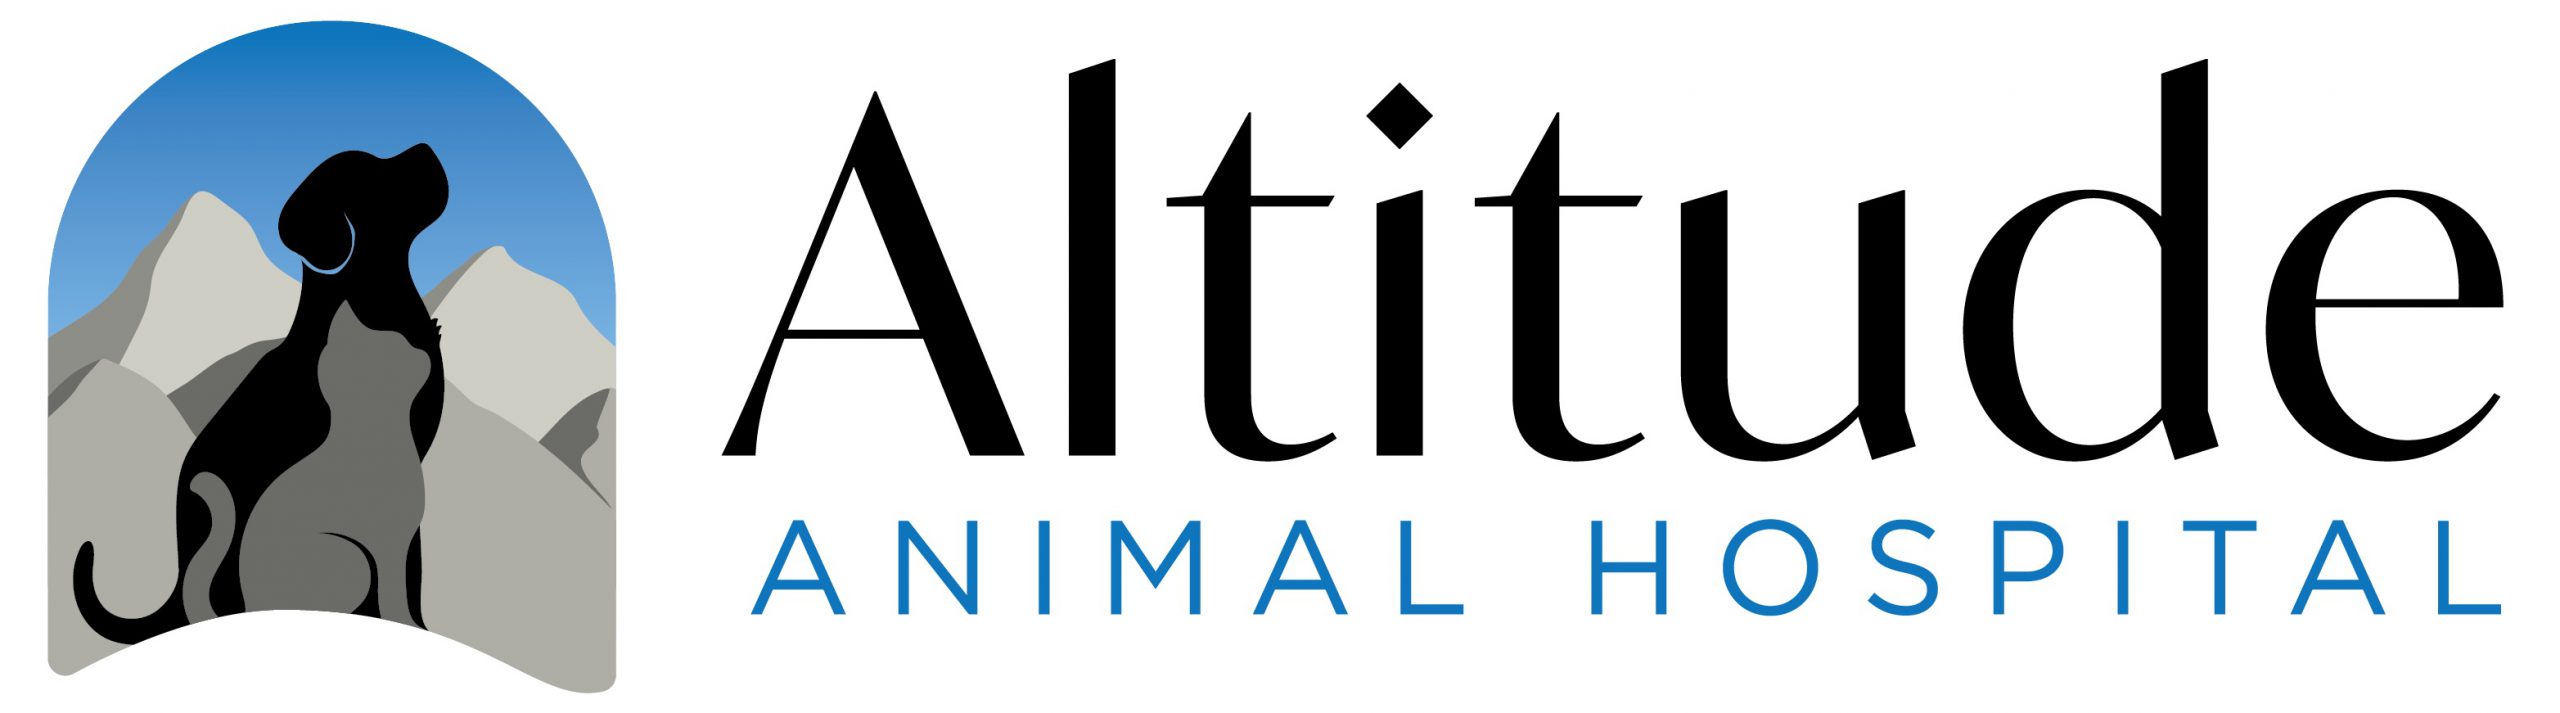 Altitude Animal Hospital